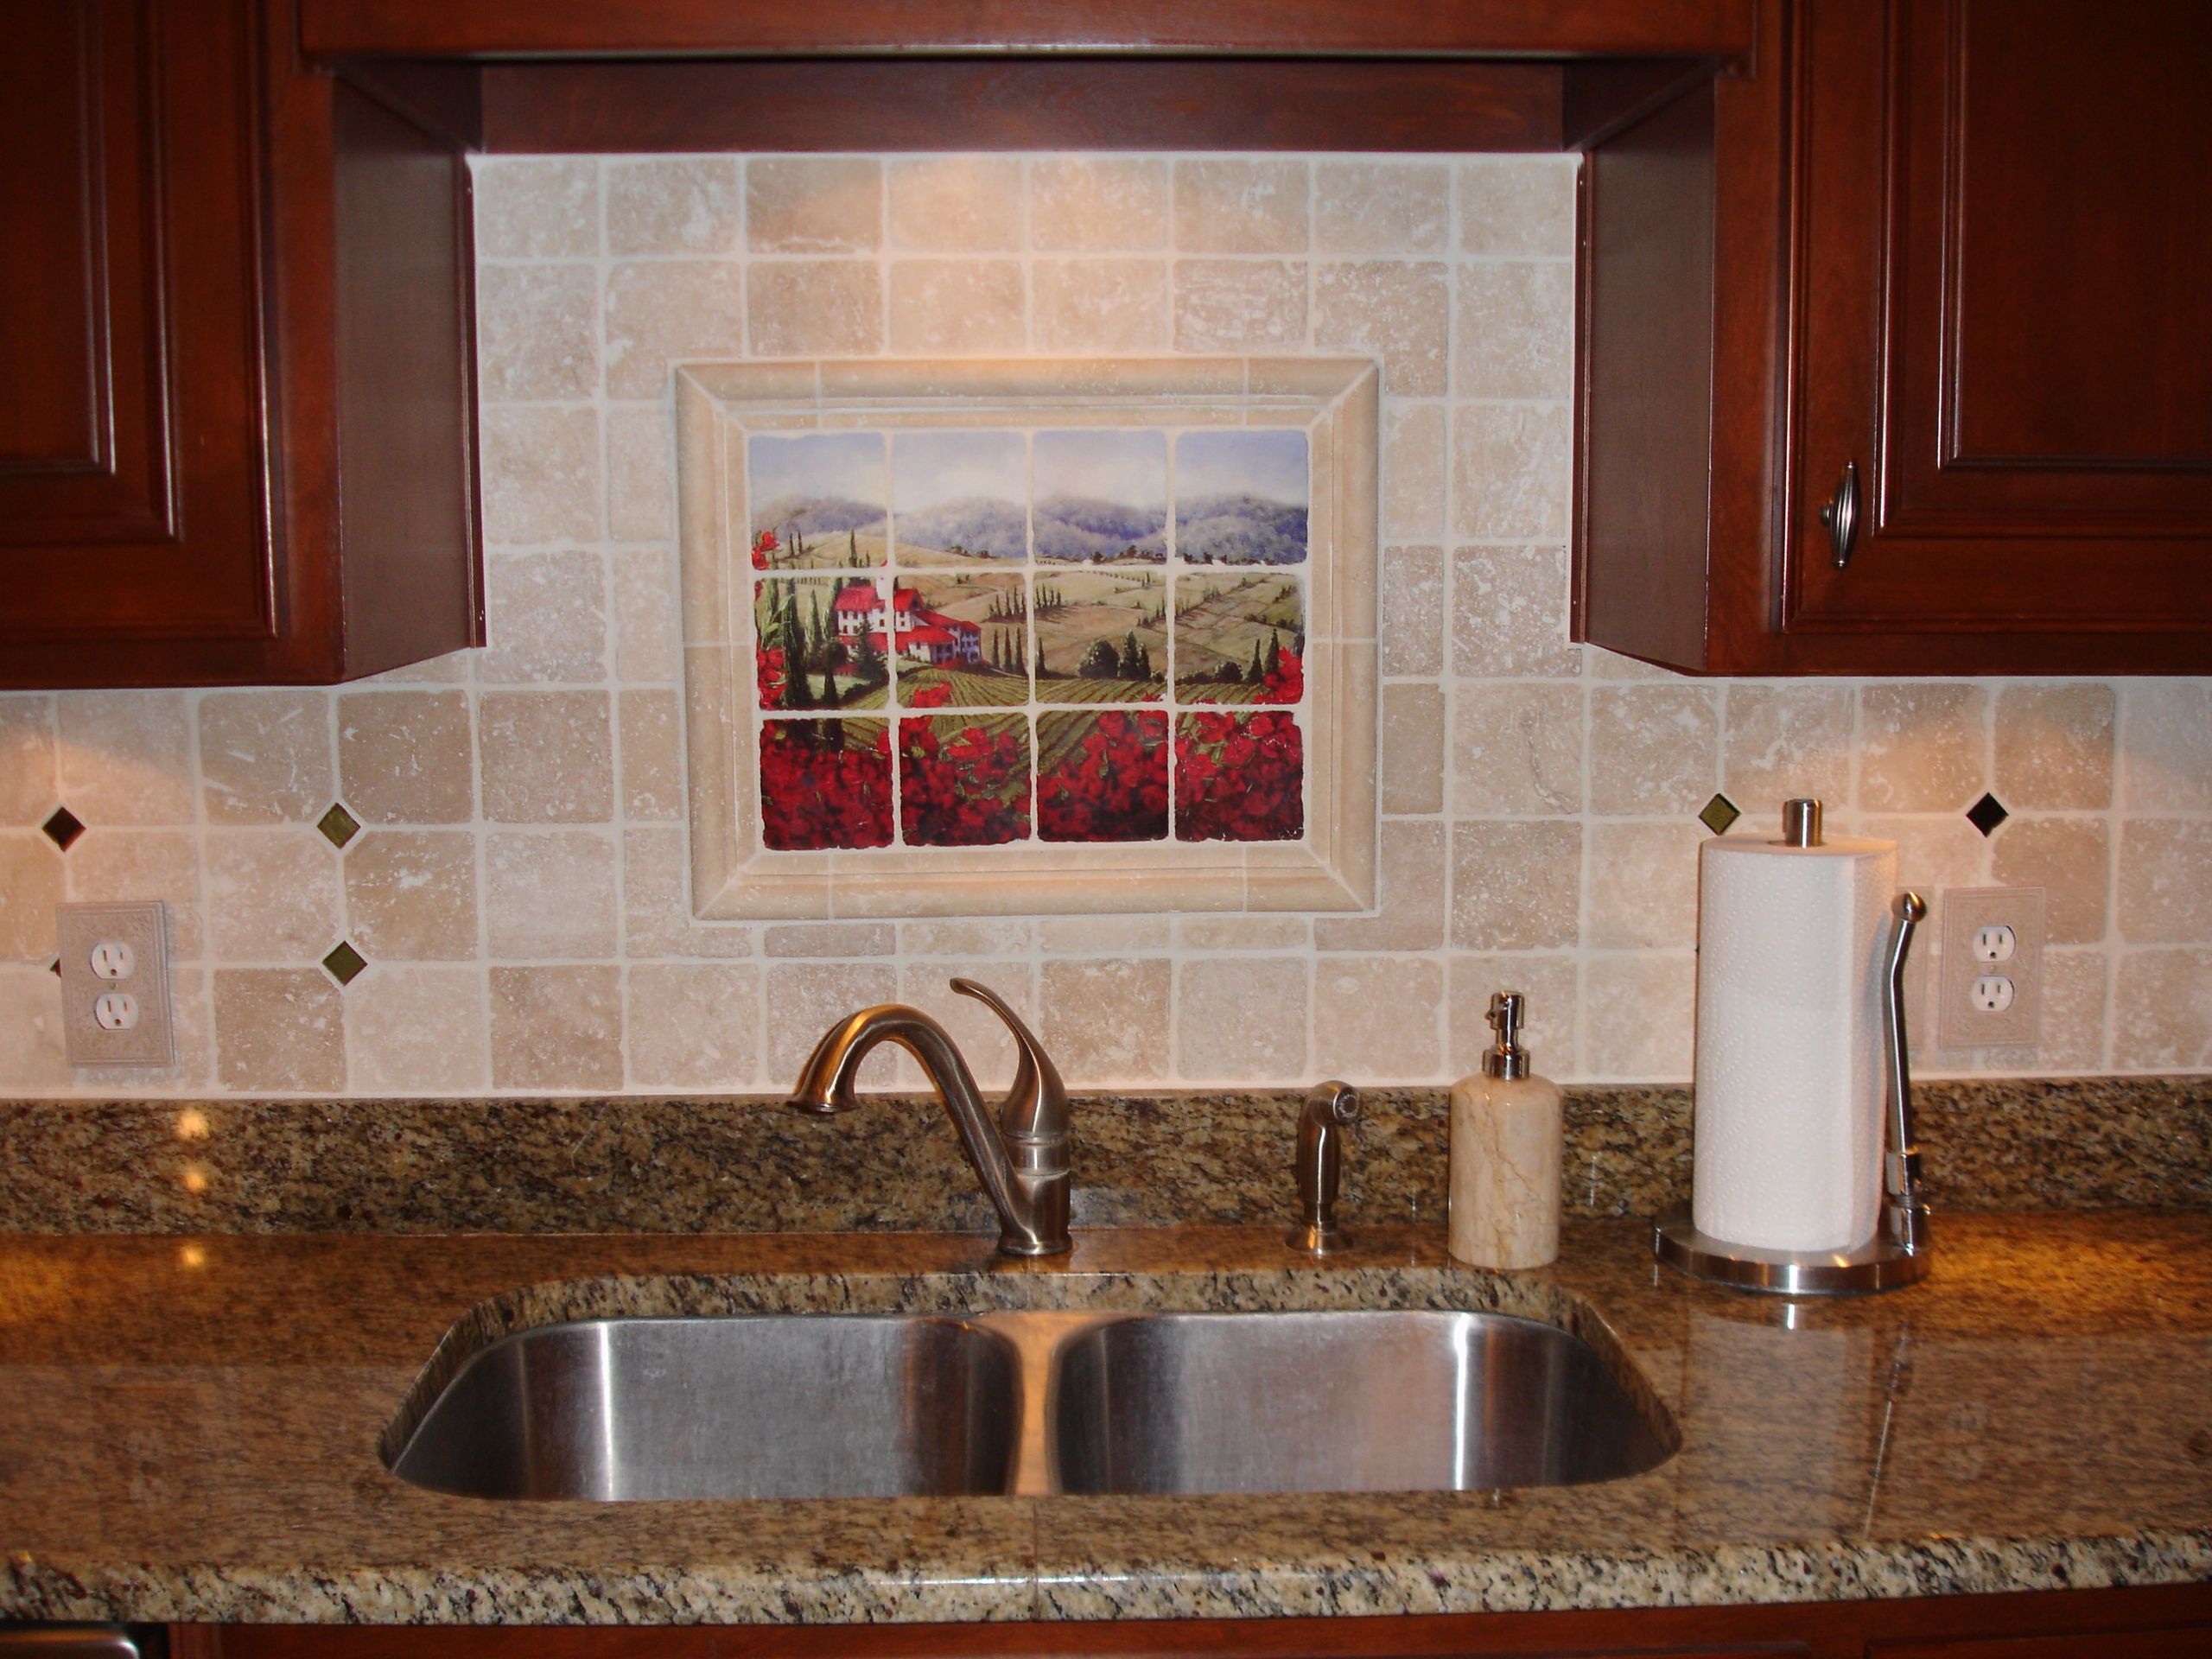 Decorative Kitchen Backsplash
 Decorative Tile